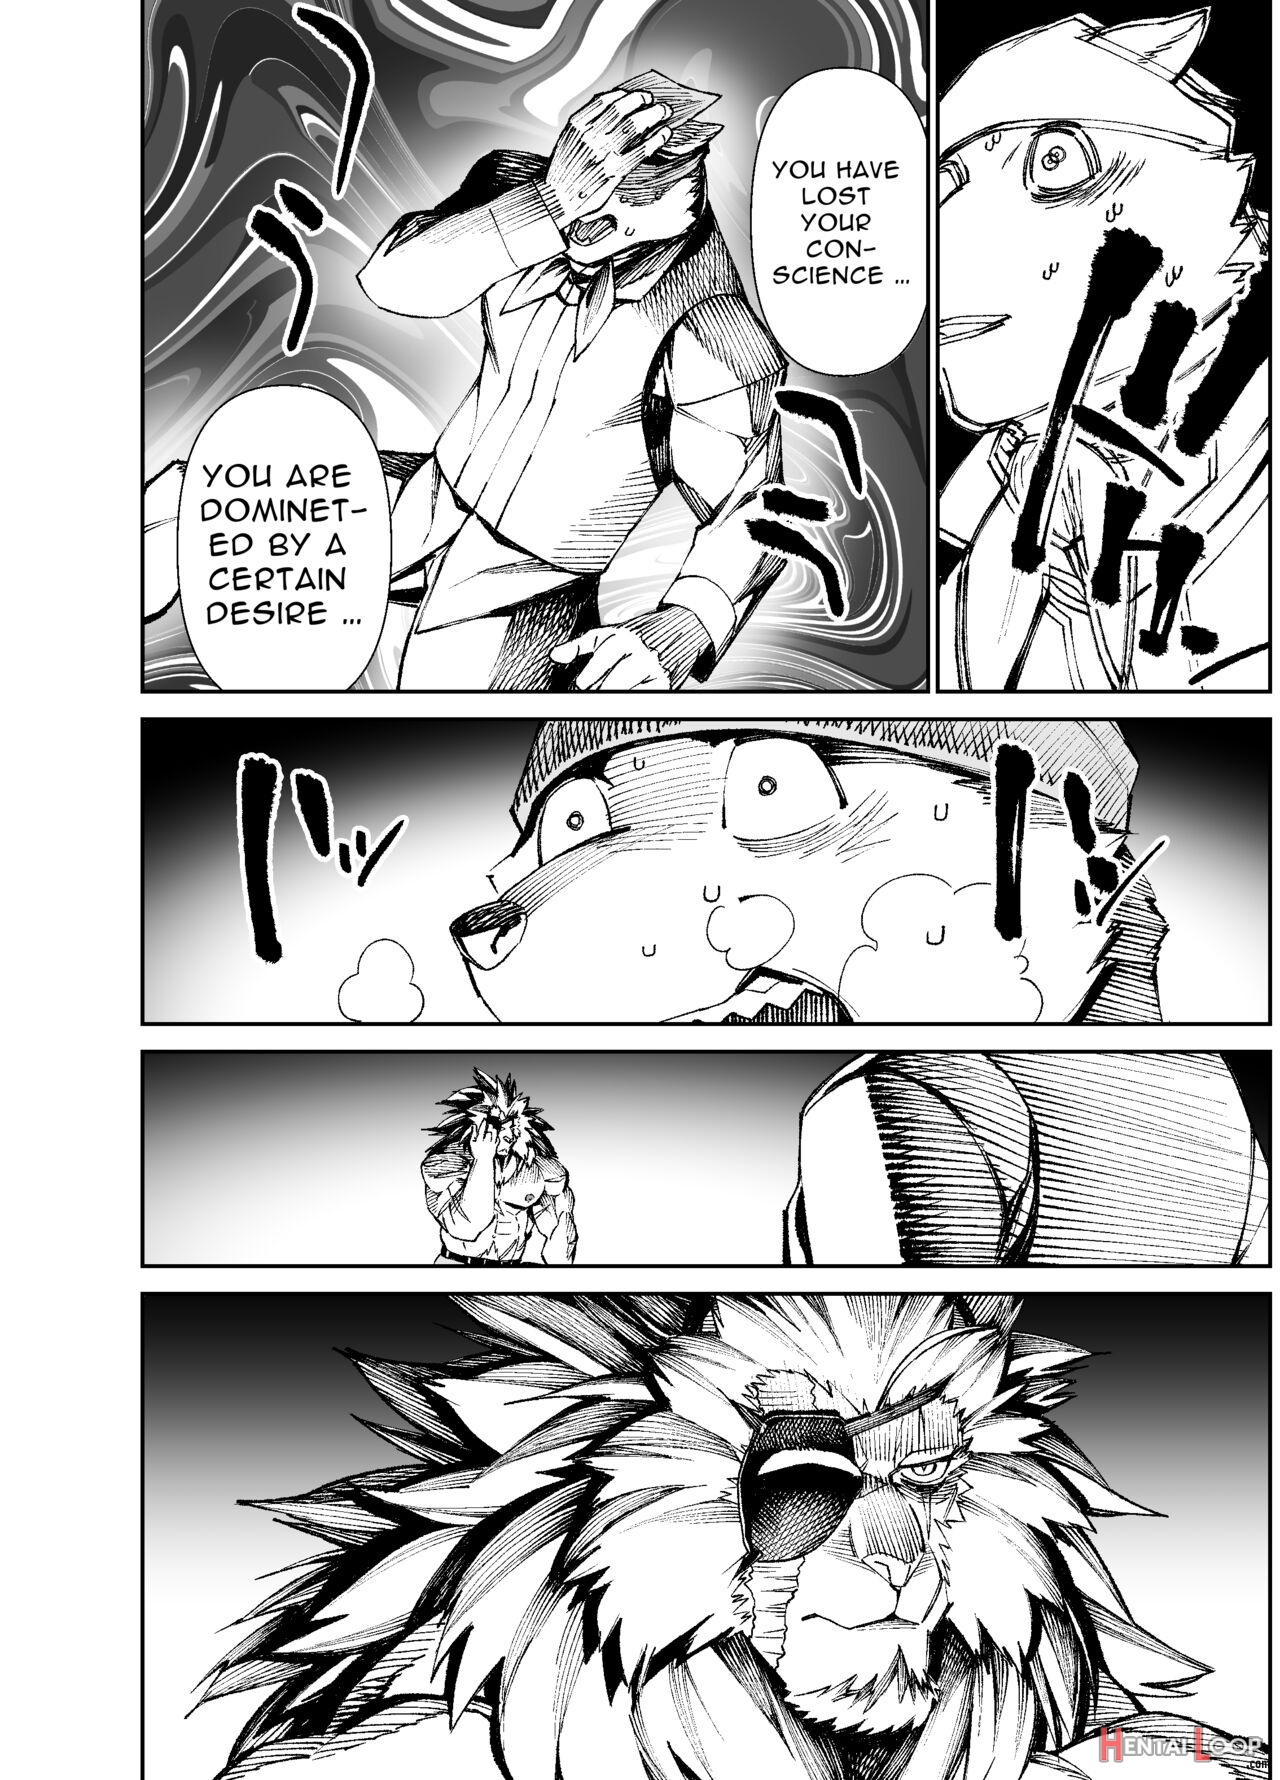 Manga 02 - Parts 1 To 9 page 9